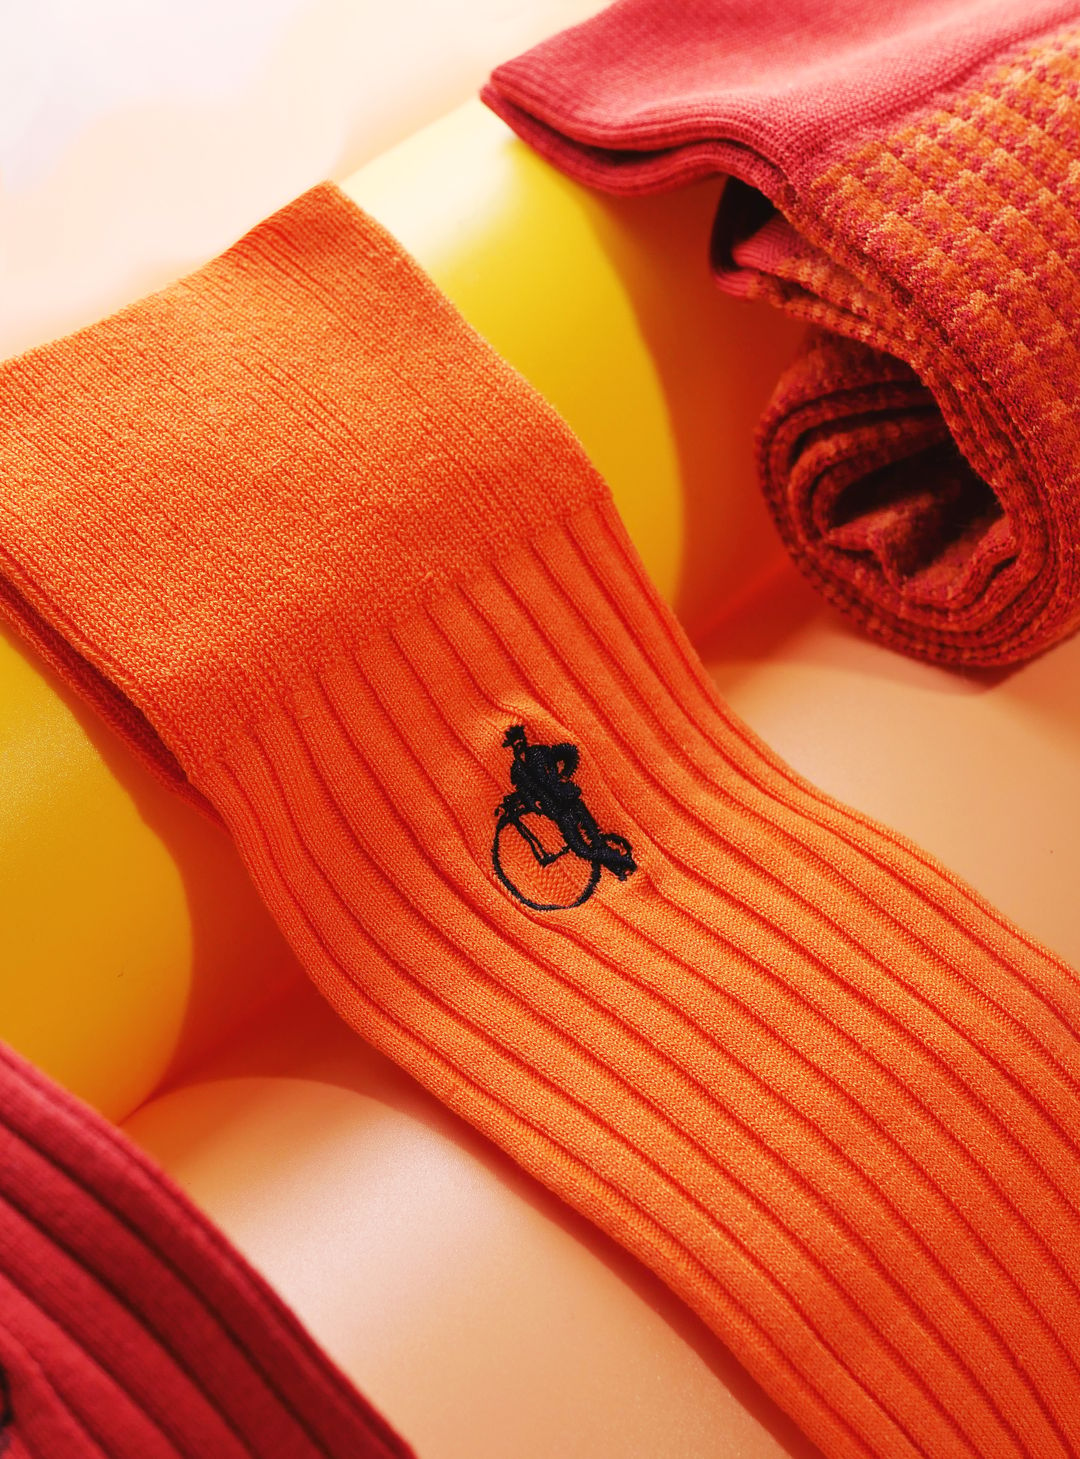 Three pairs of orange socks on a yellow background.